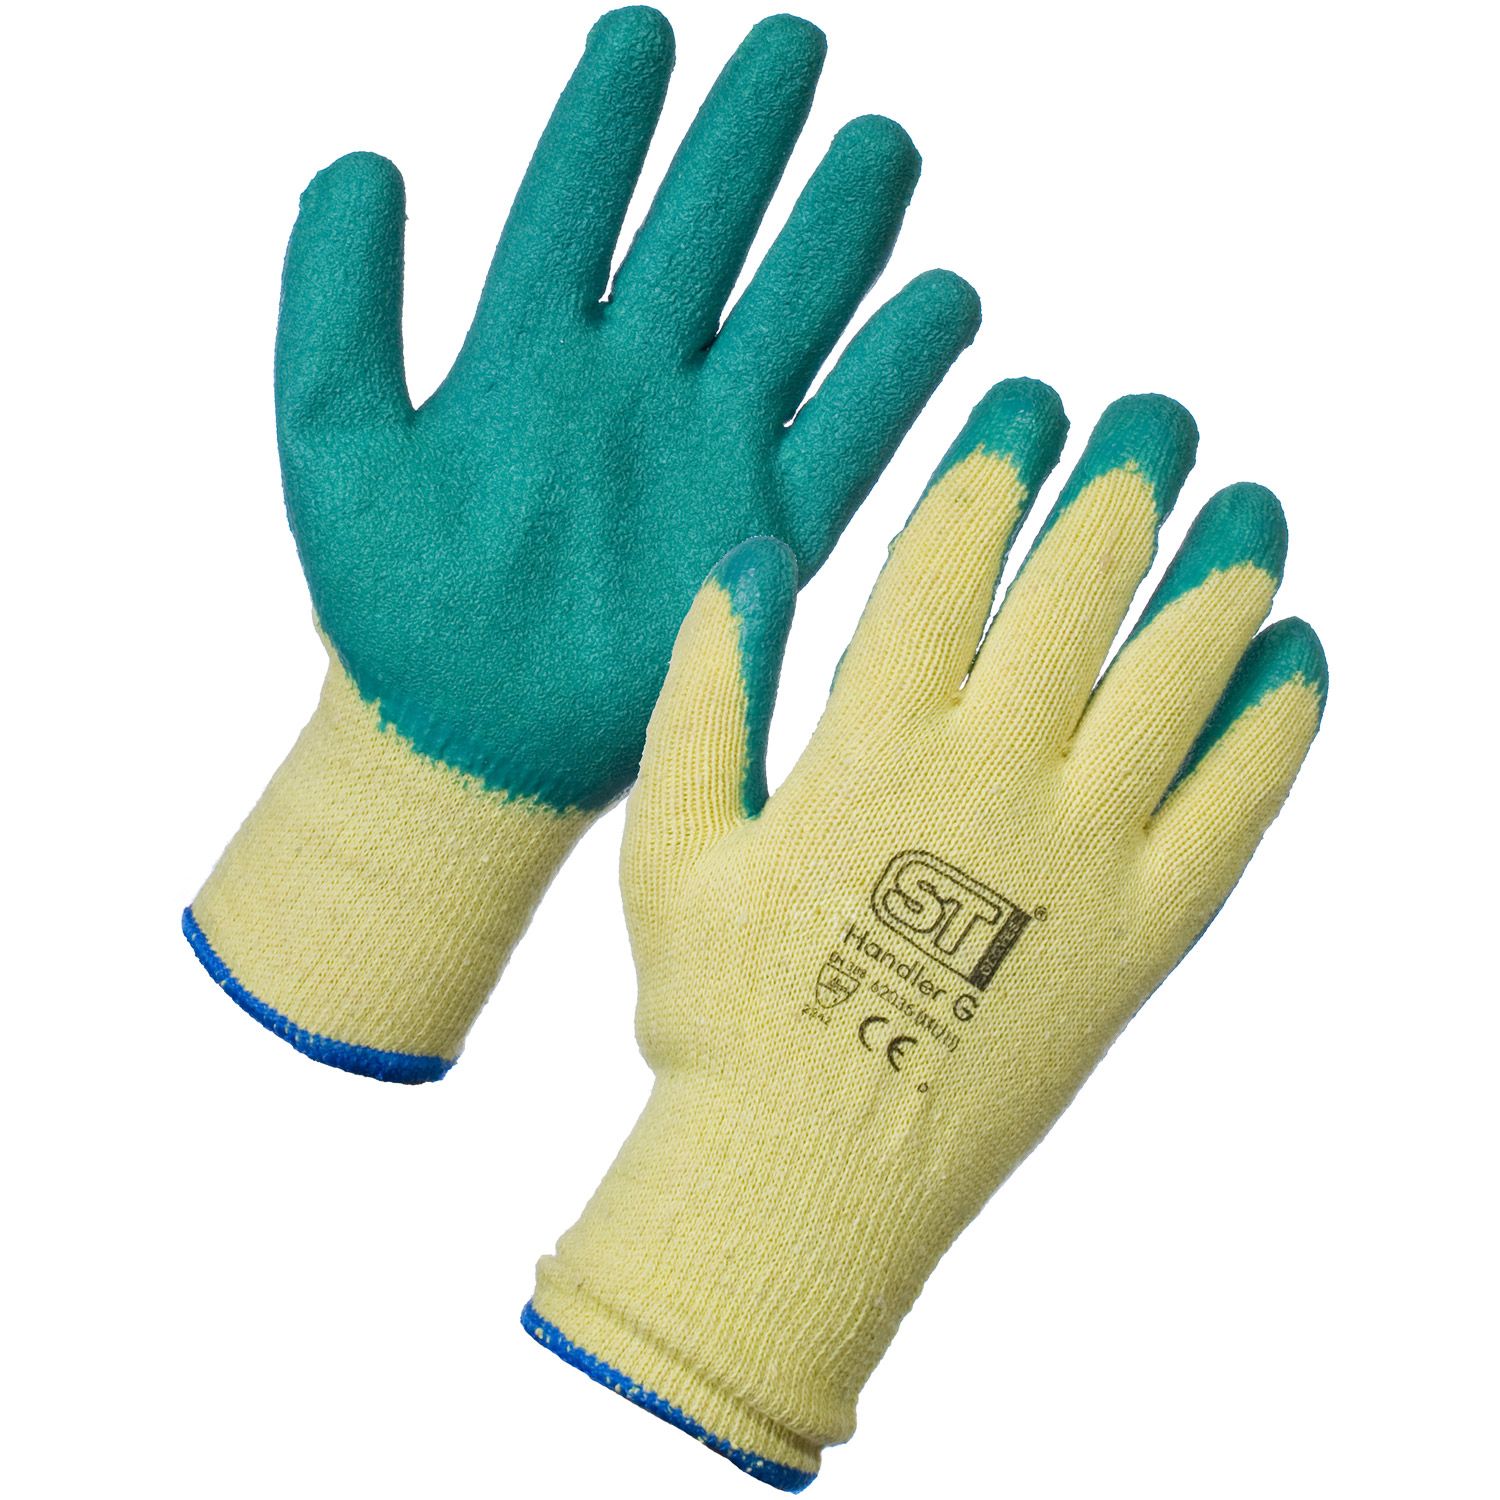 General Handler Glove - Small - 12 Pack